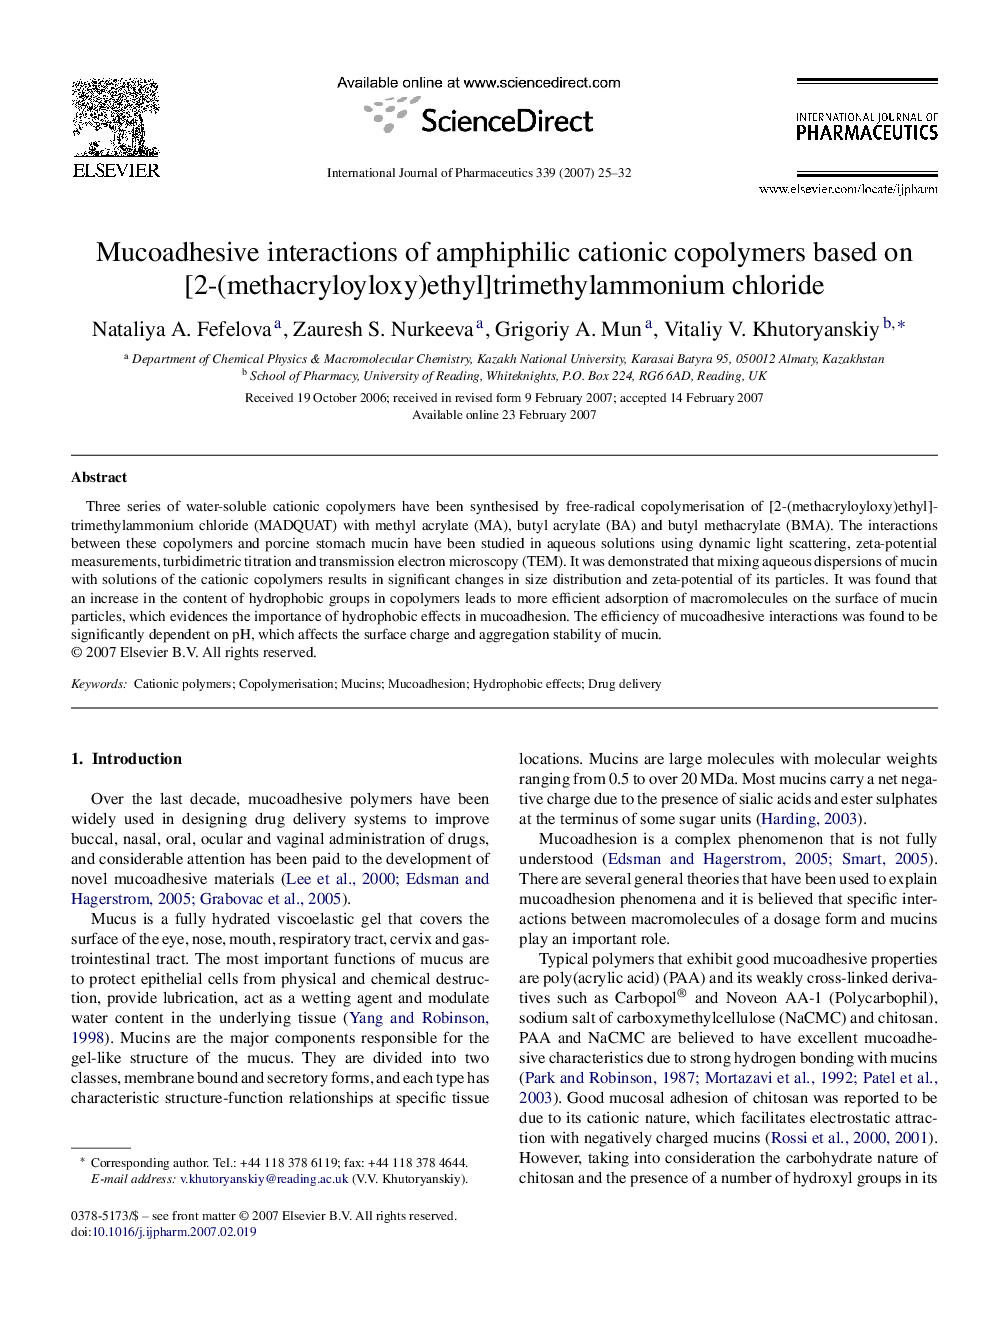 Mucoadhesive interactions of amphiphilic cationic copolymers based on [2-(methacryloyloxy)ethyl]trimethylammonium chloride